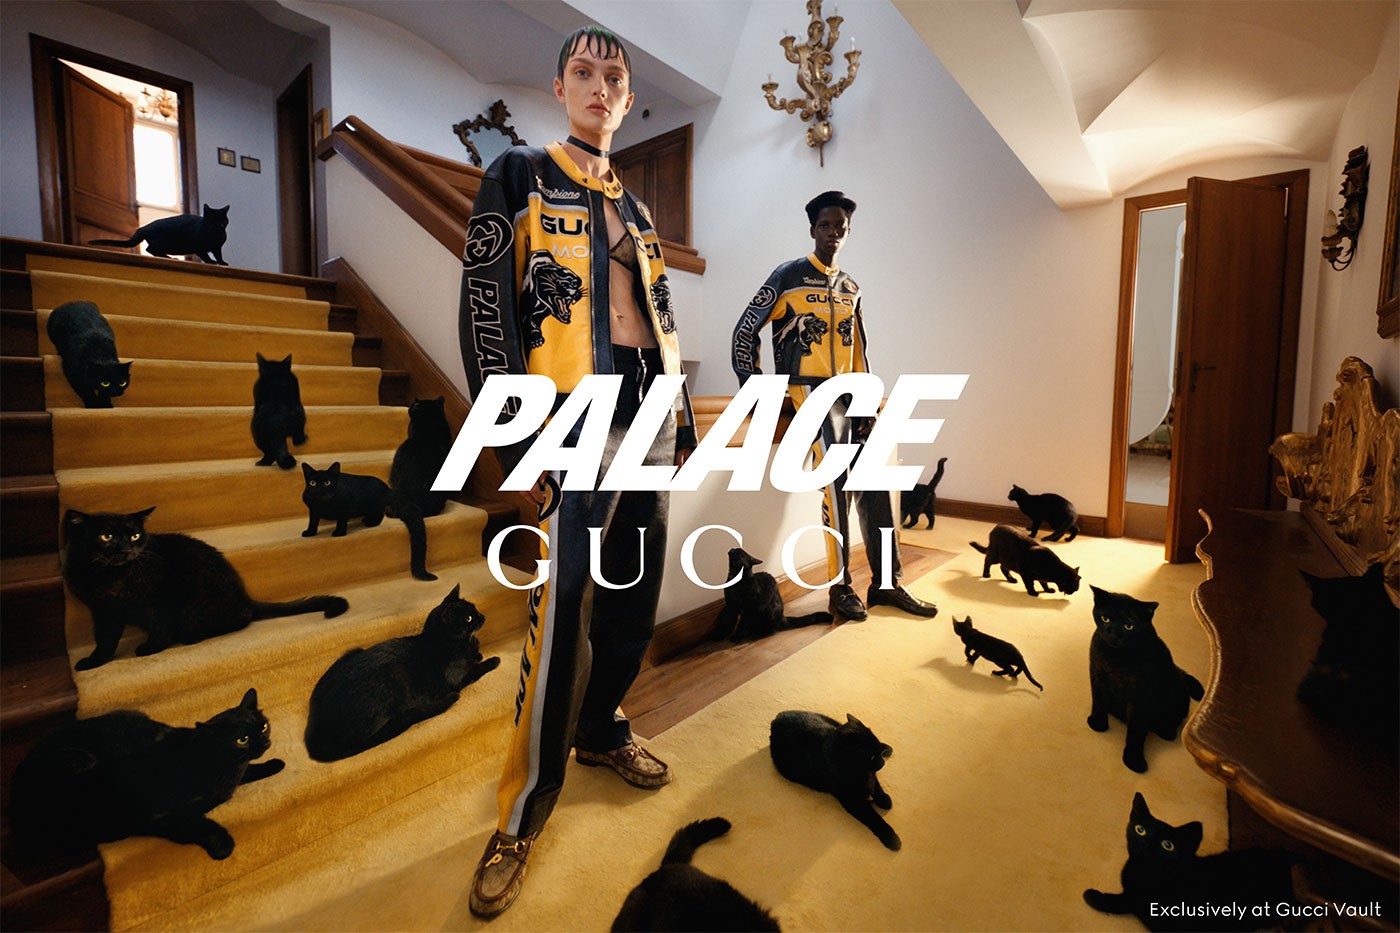 Palace Collaborations Umbro Gucci Vans Streetwear Calvin Klein Rapha Crocs Clothing London Fashion Style 